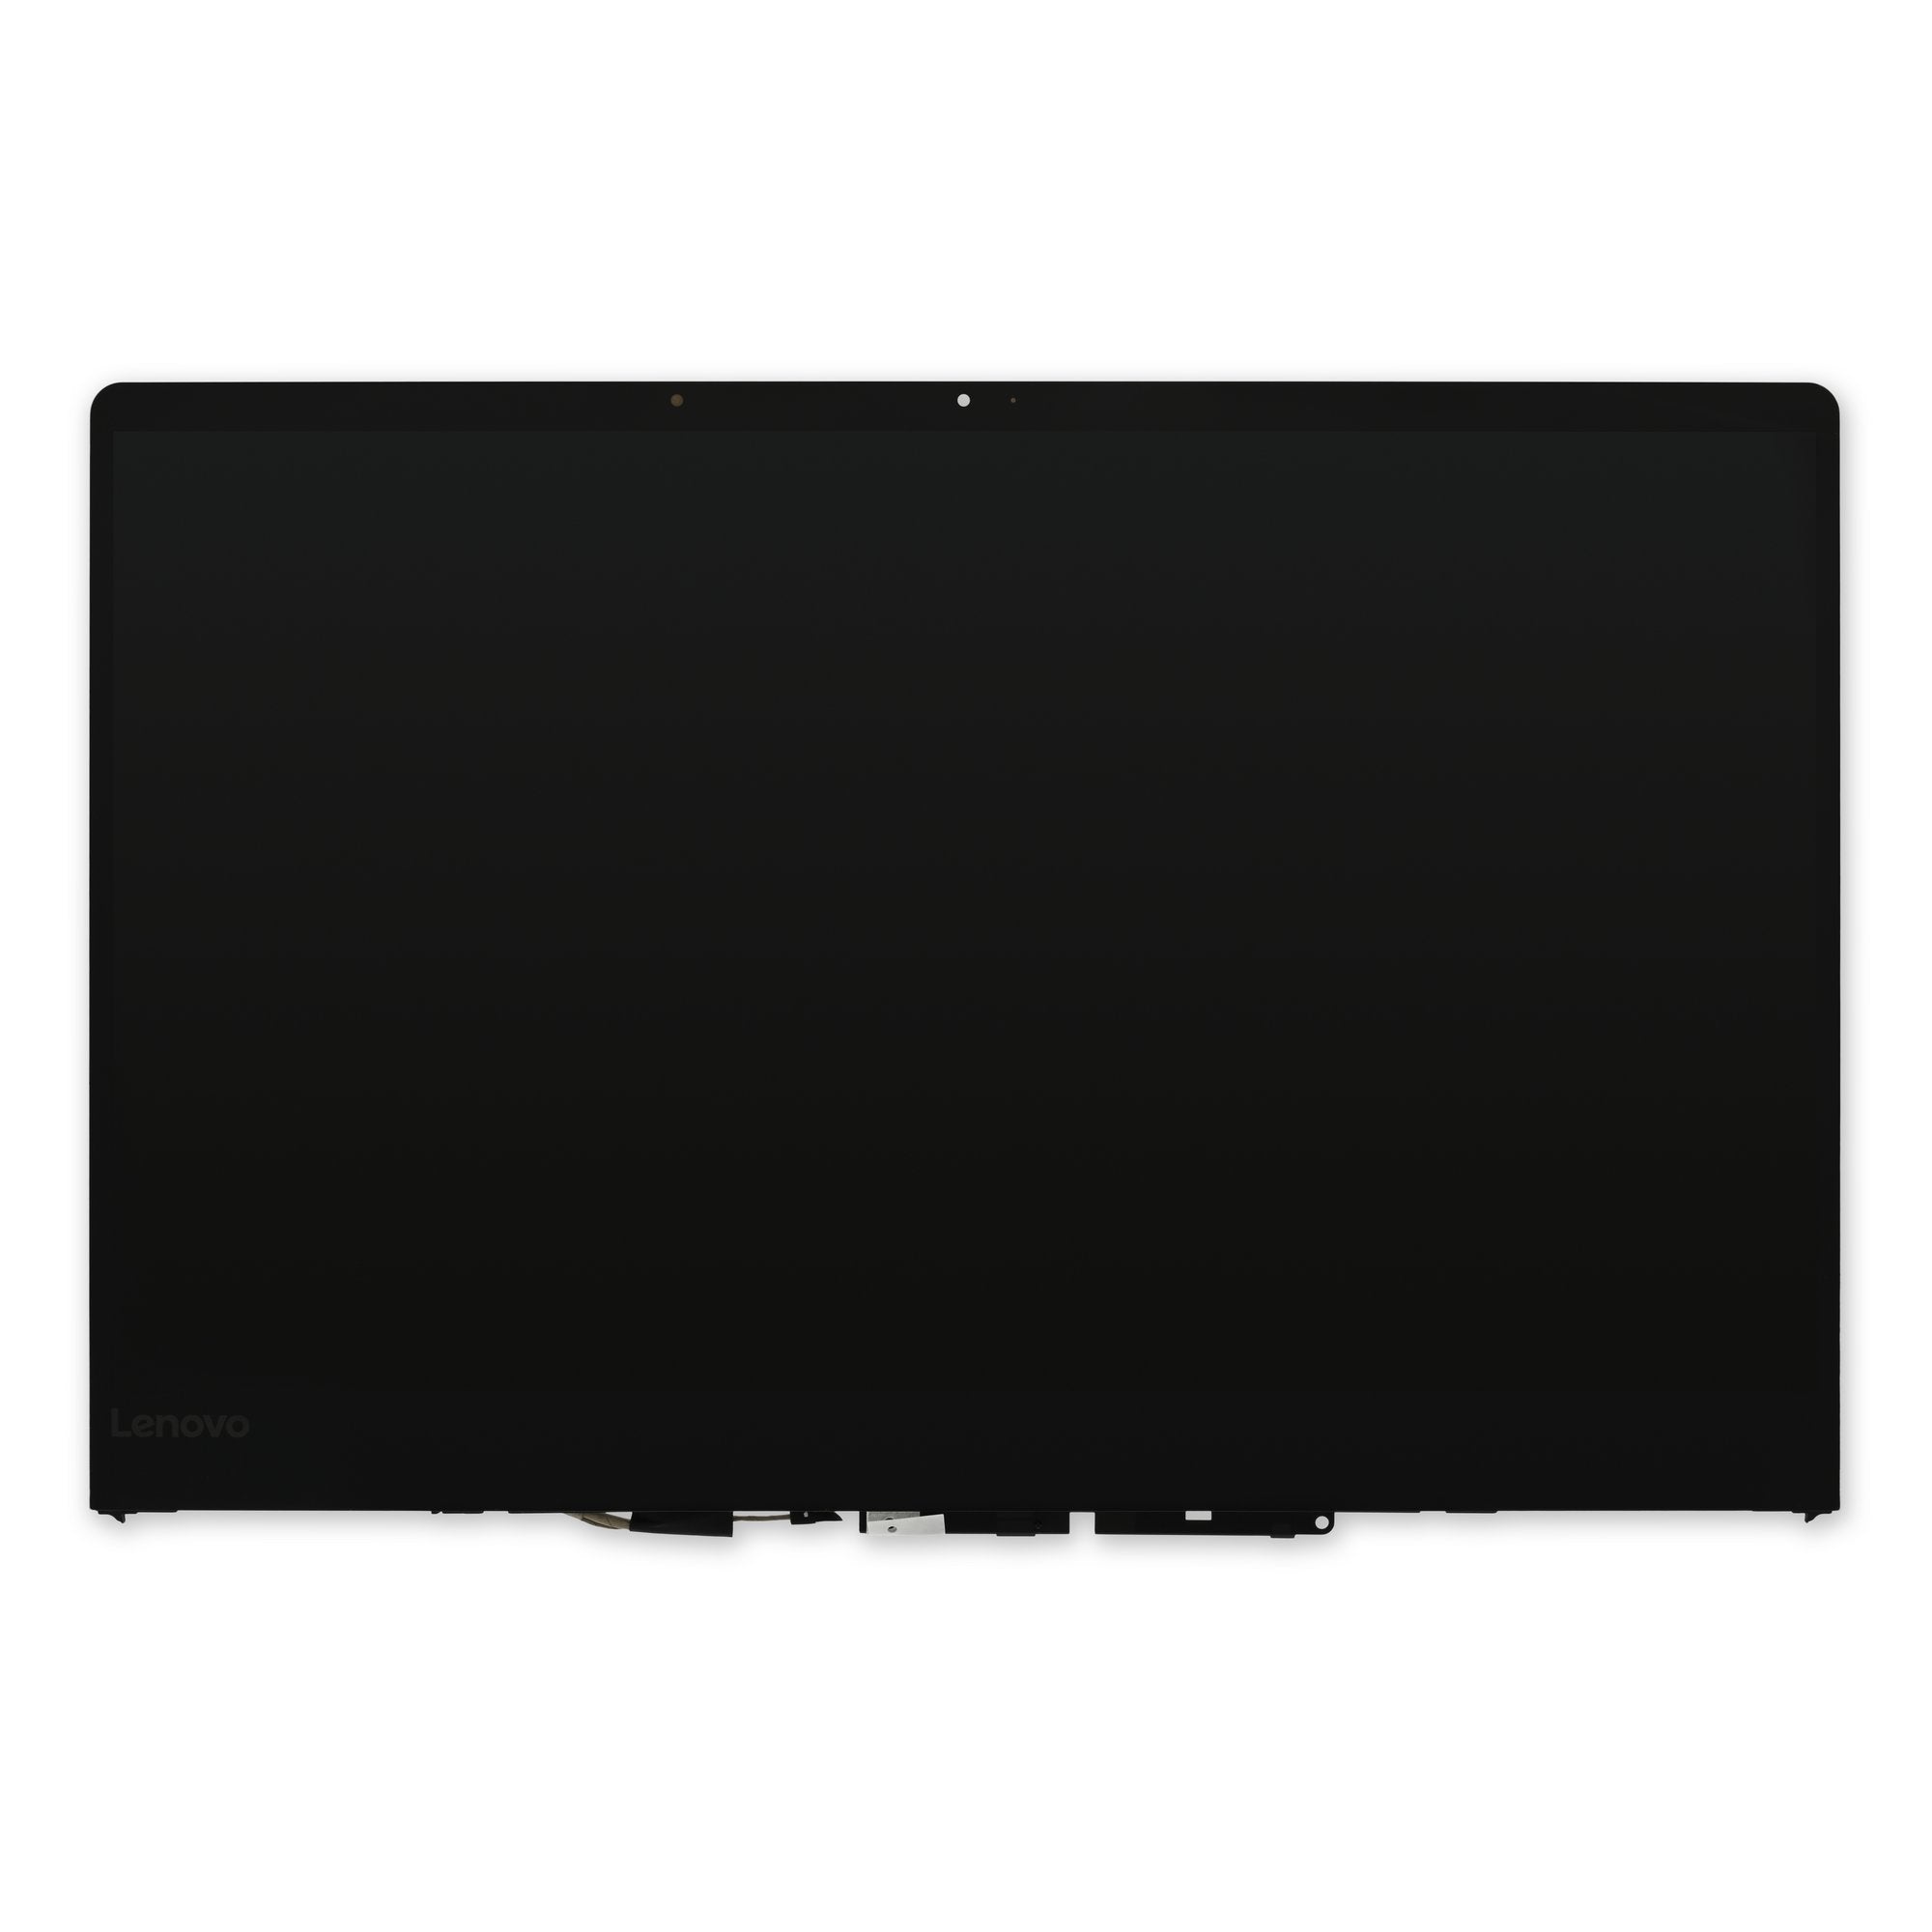 Lenovo IdeaPad Yoga 710-15IKB LCD Panel New